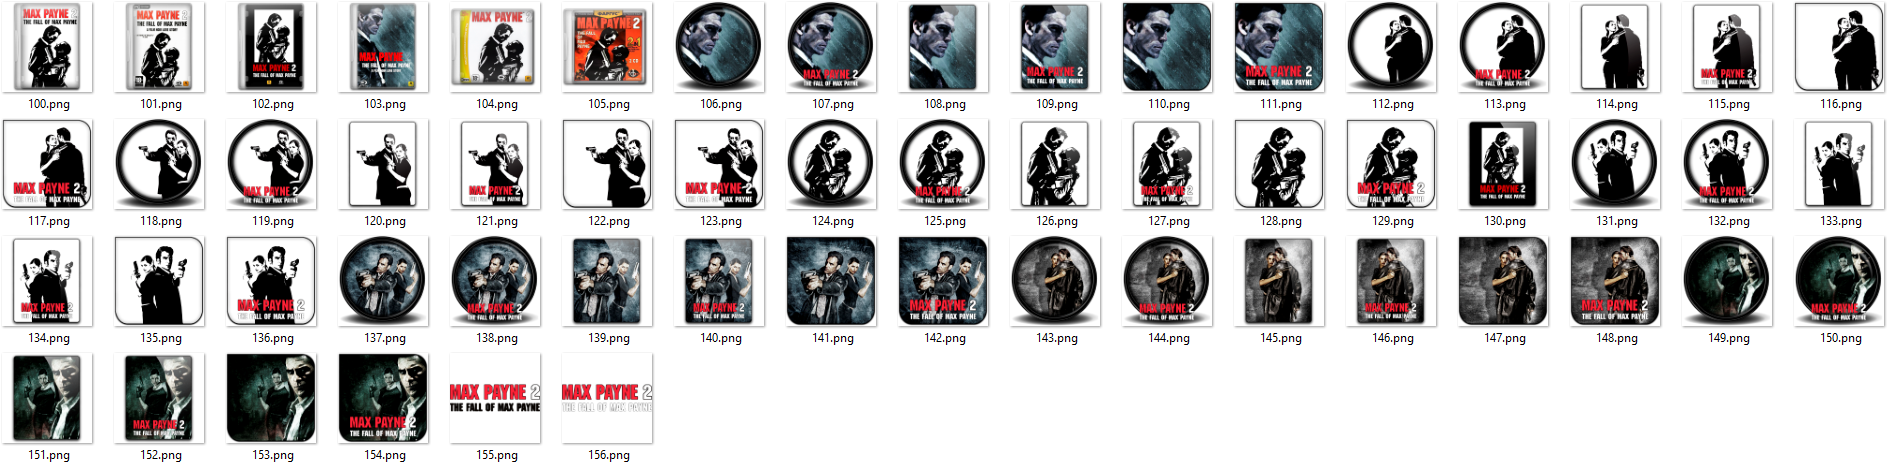 Иконки из набора к игре Max Payne 2